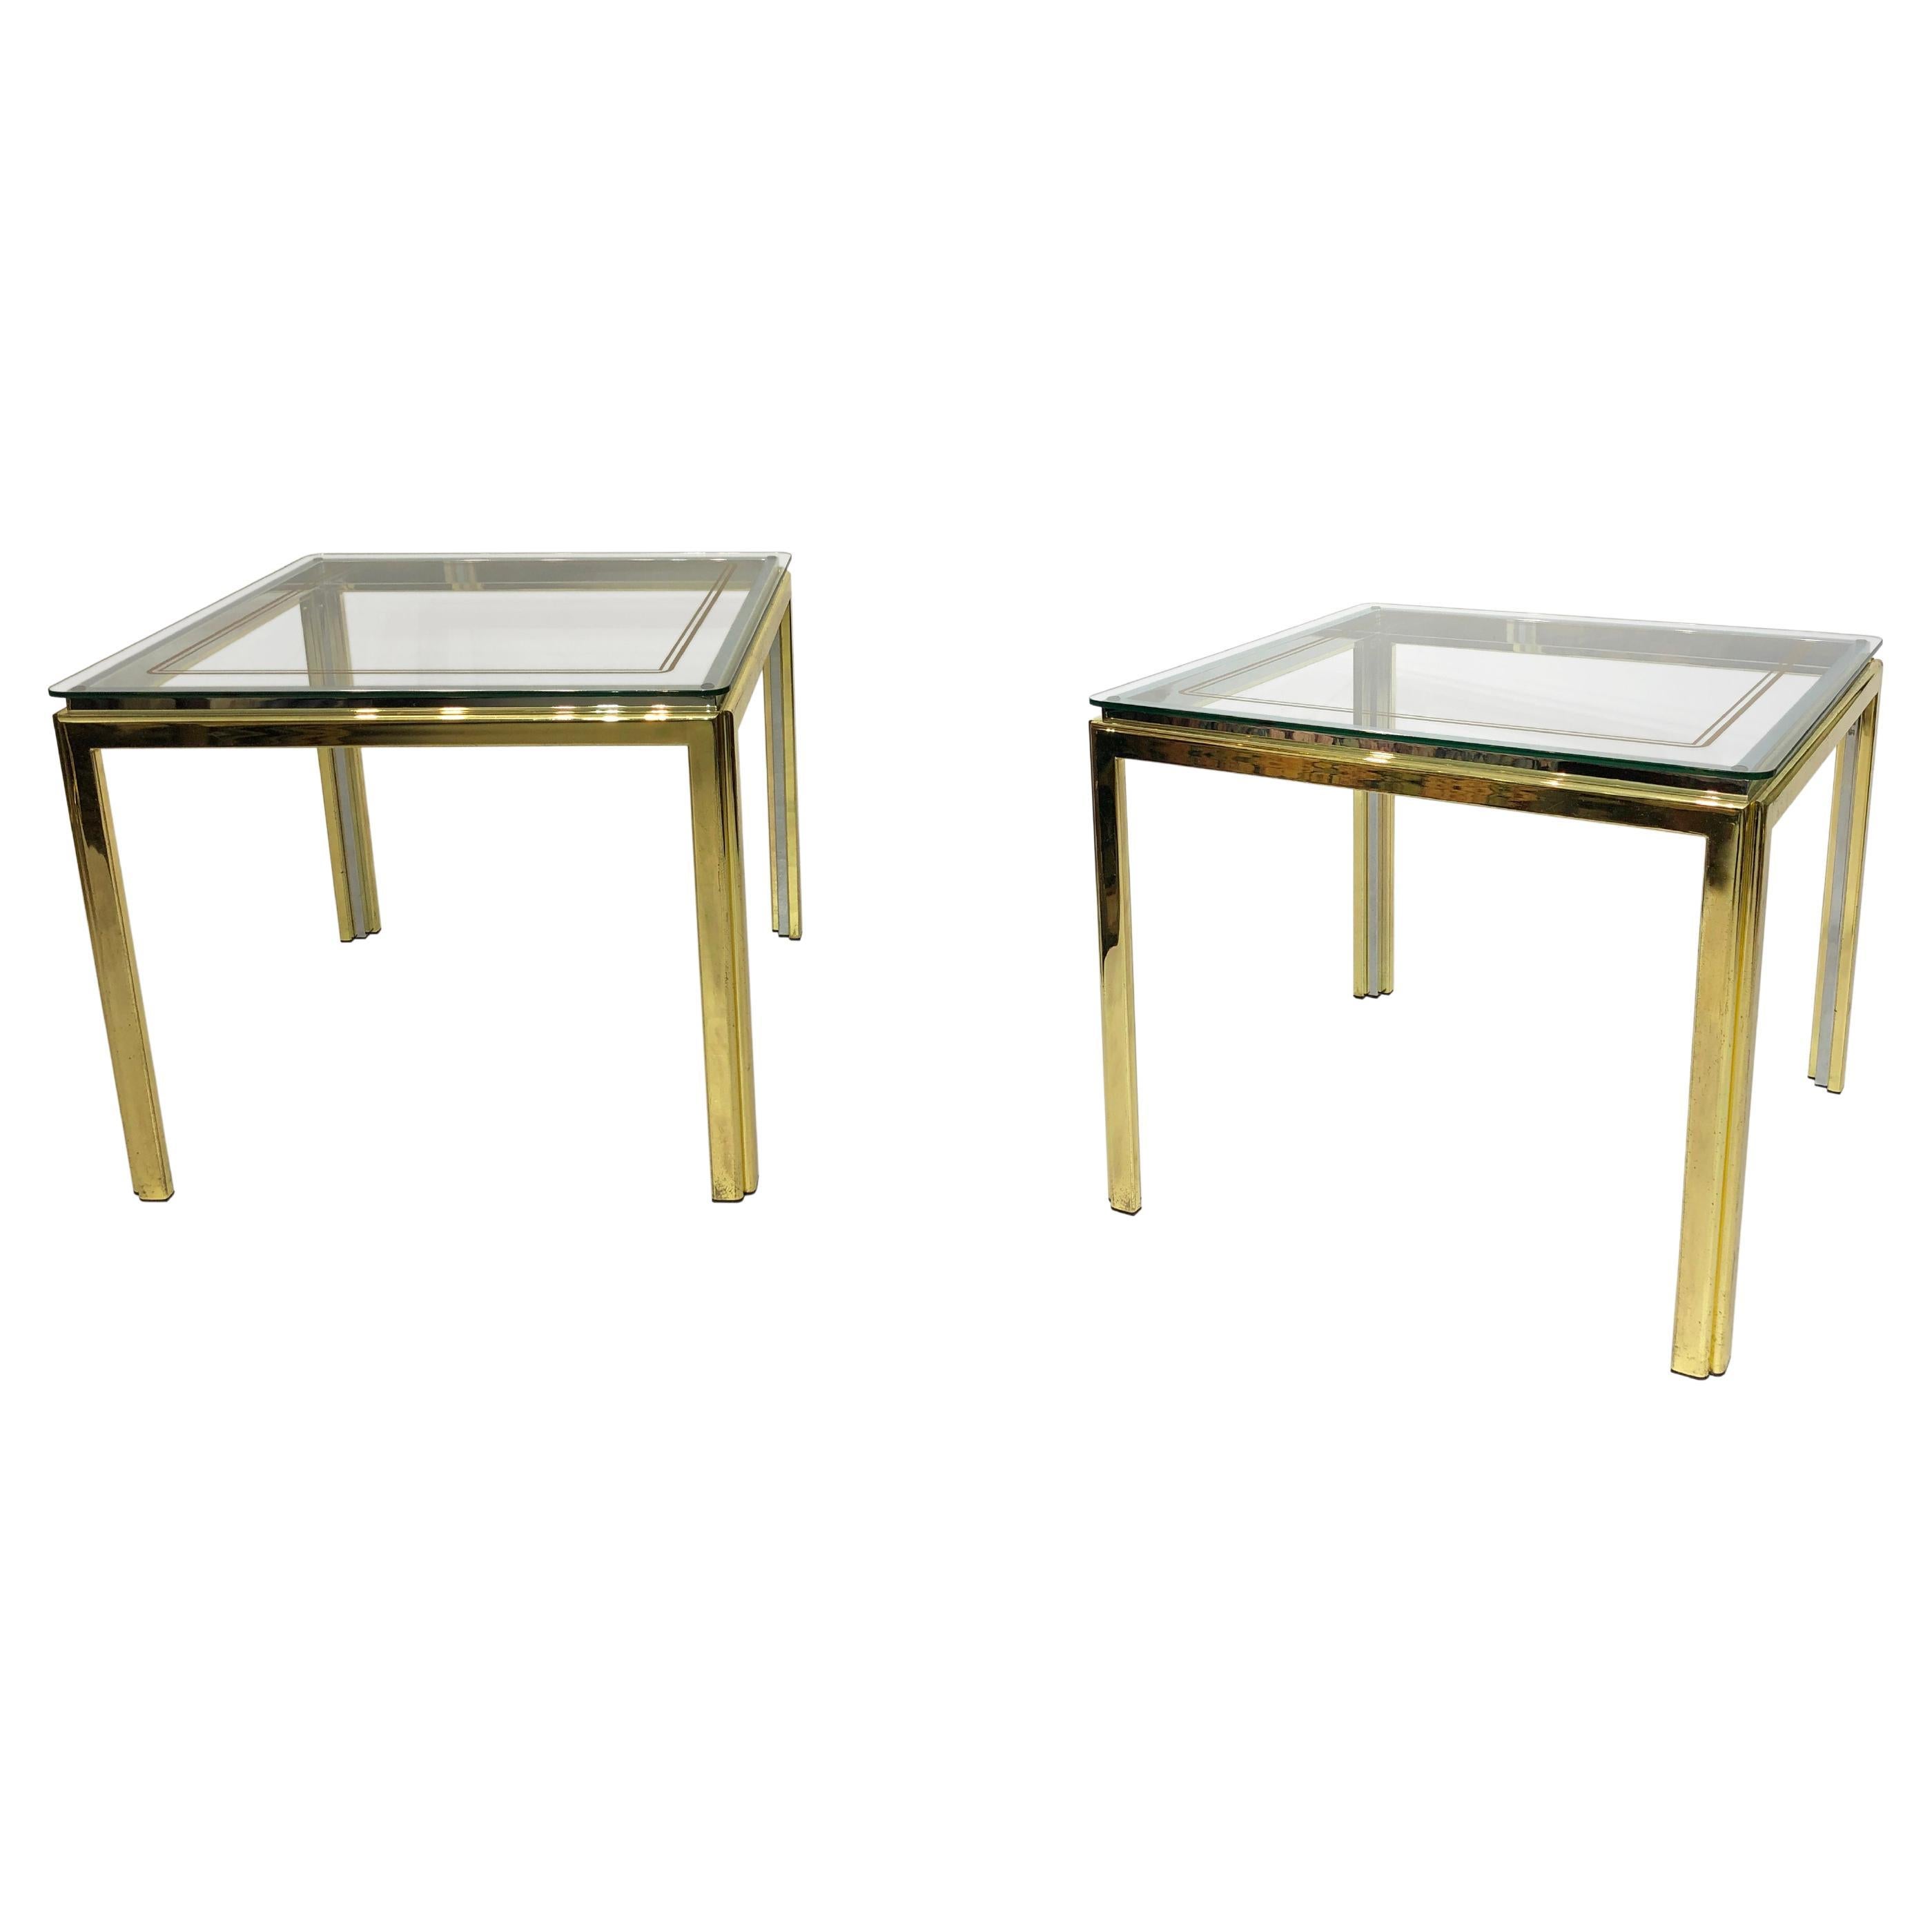 Pair of Side Brass Glass Chrome Tables Renato Zevi Style Hollywood Regency #2 For Sale